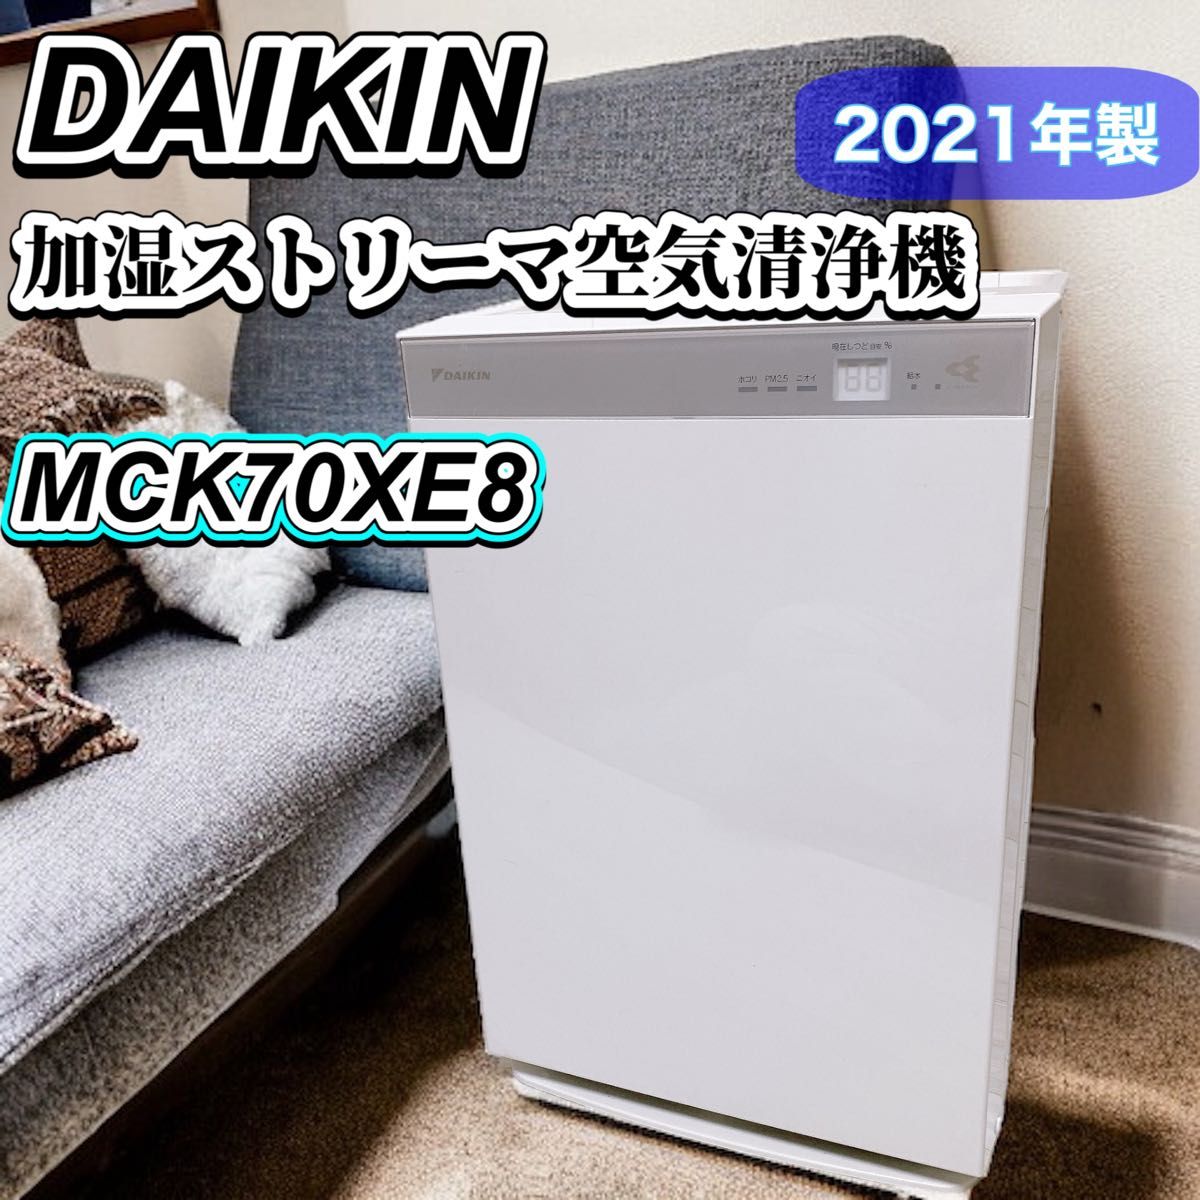 DAIKIN 加湿ストリーマ 空気清浄機 MCK70XE8-W ホワイト 2021年製 ダイキン 31畳 花粉 pm2.5